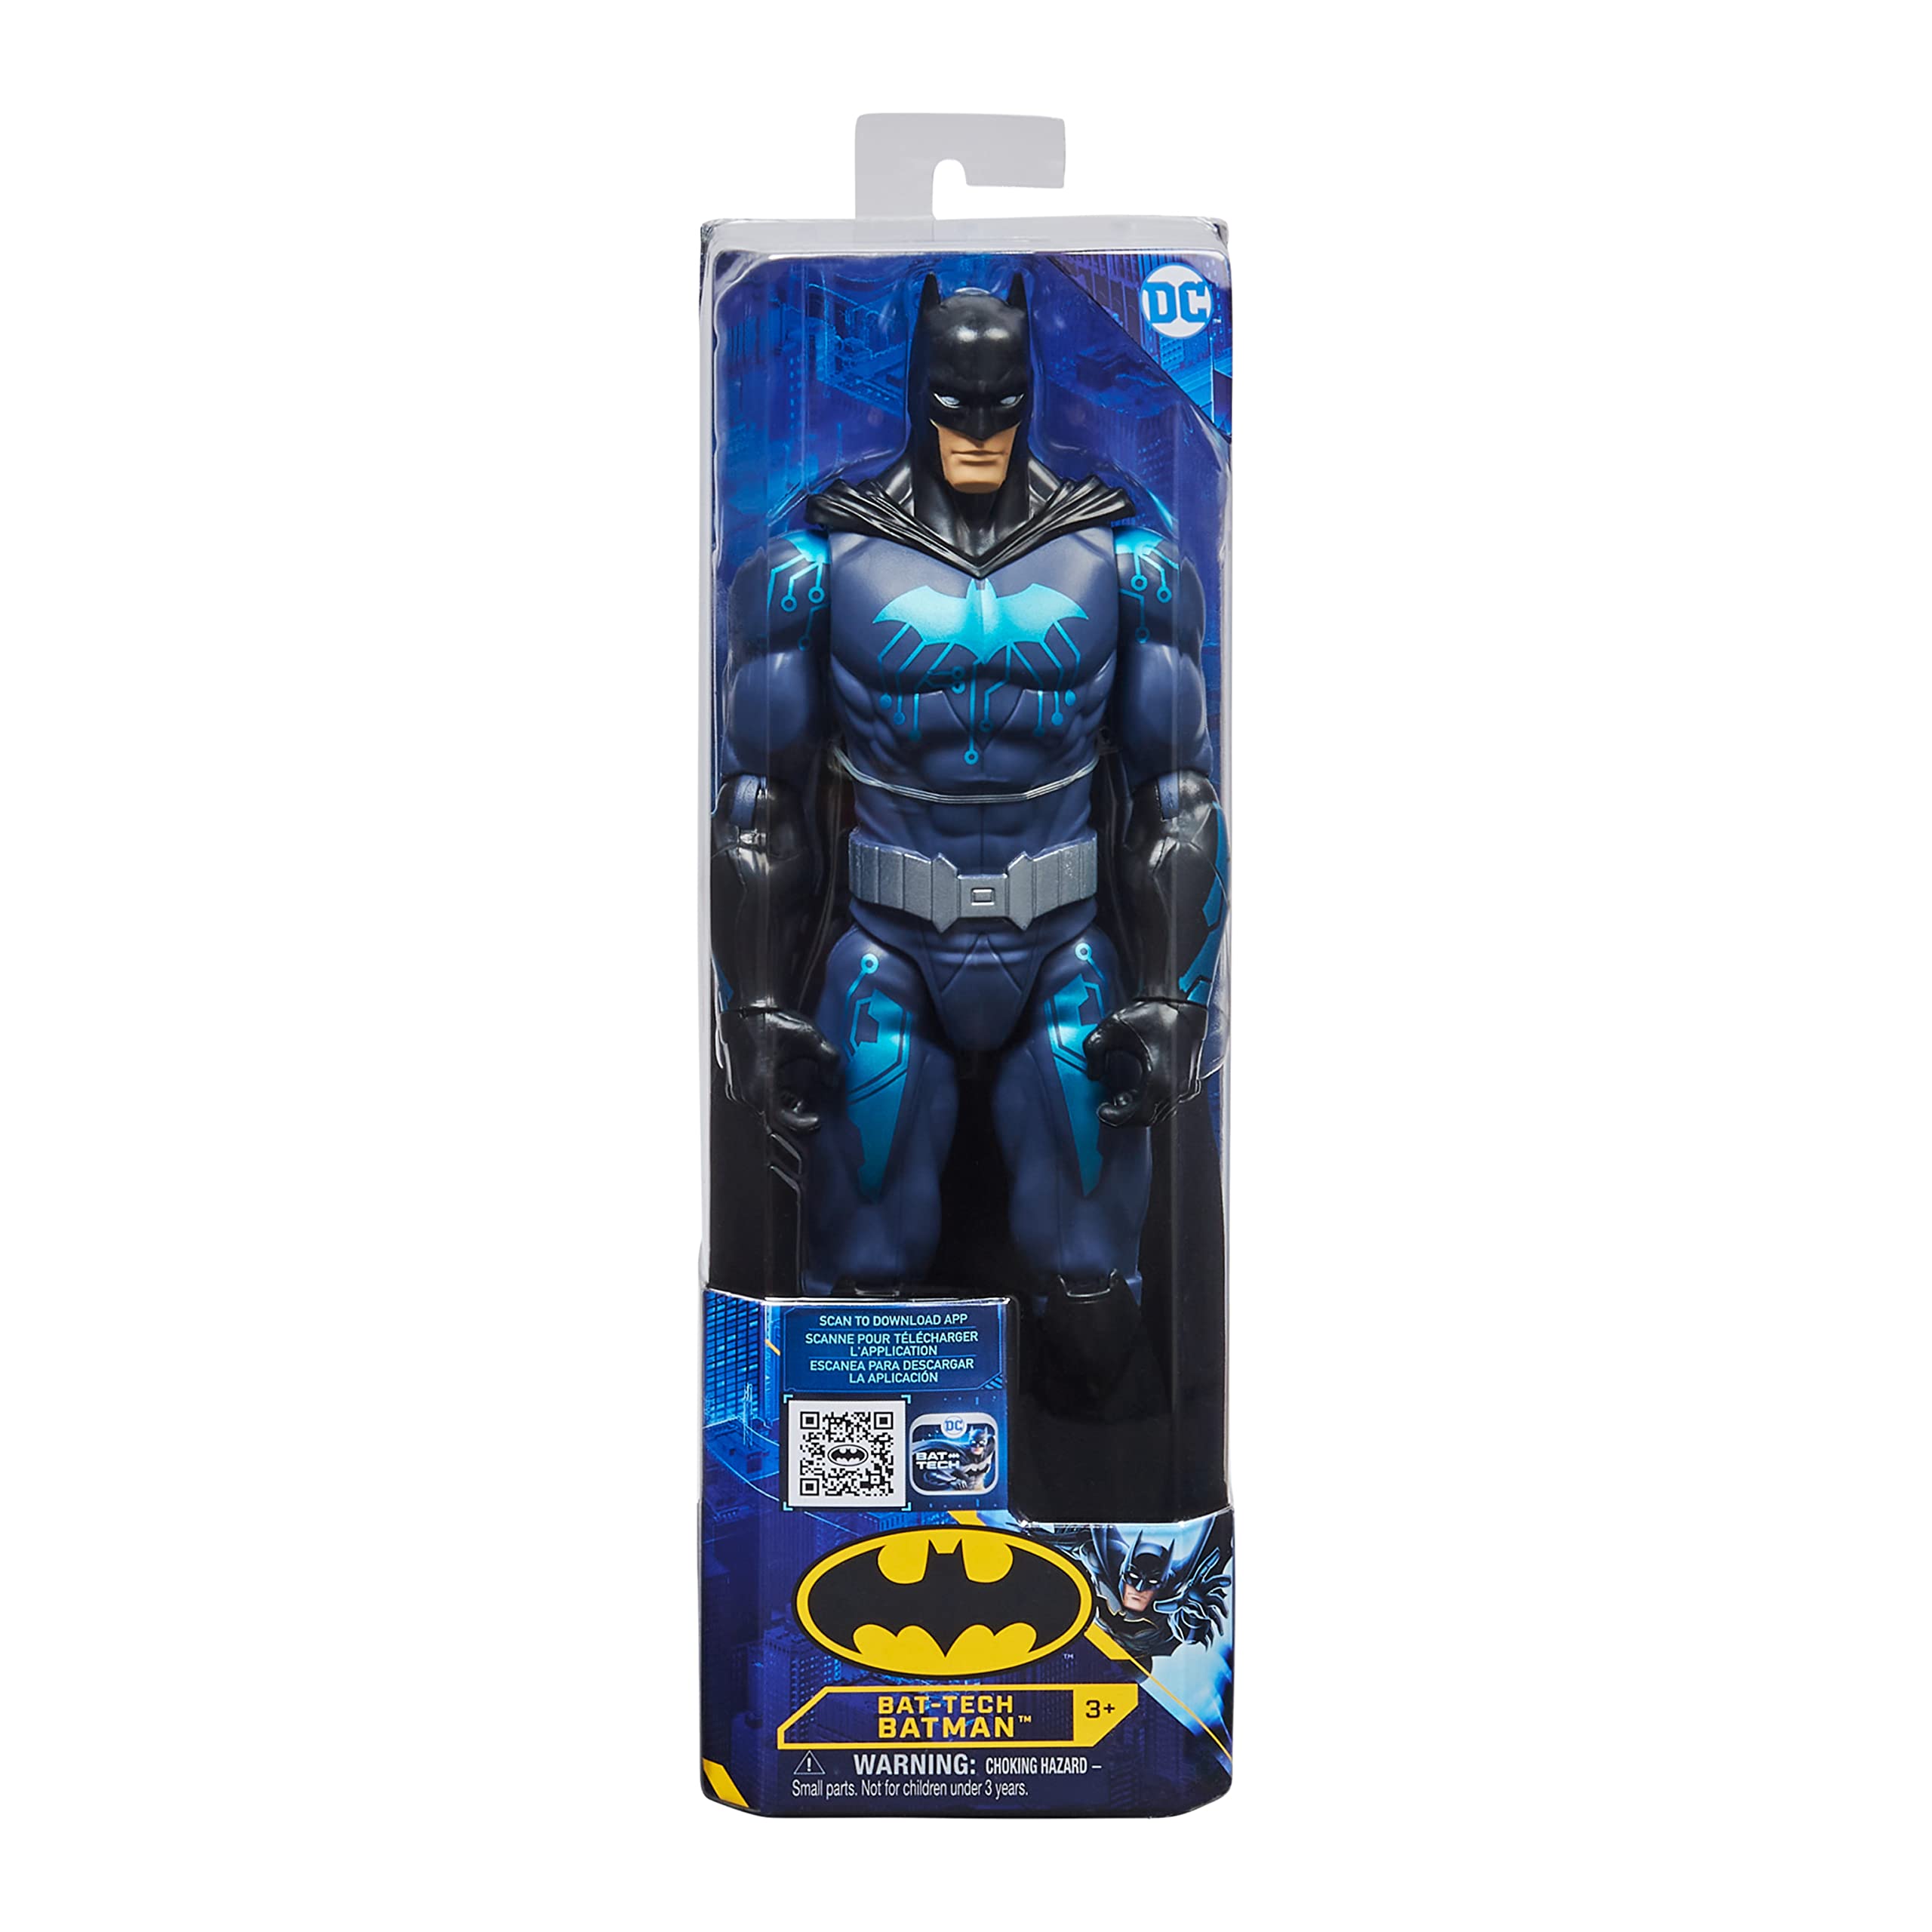 Mua DC Comics Batman 12-inch Bat-Tech Batman Action Figure (Black/Blue  Suit), Kids Toys for Boys Aged 3 and up trên Amazon Mỹ chính hãng 2023 |  Giaonhan247